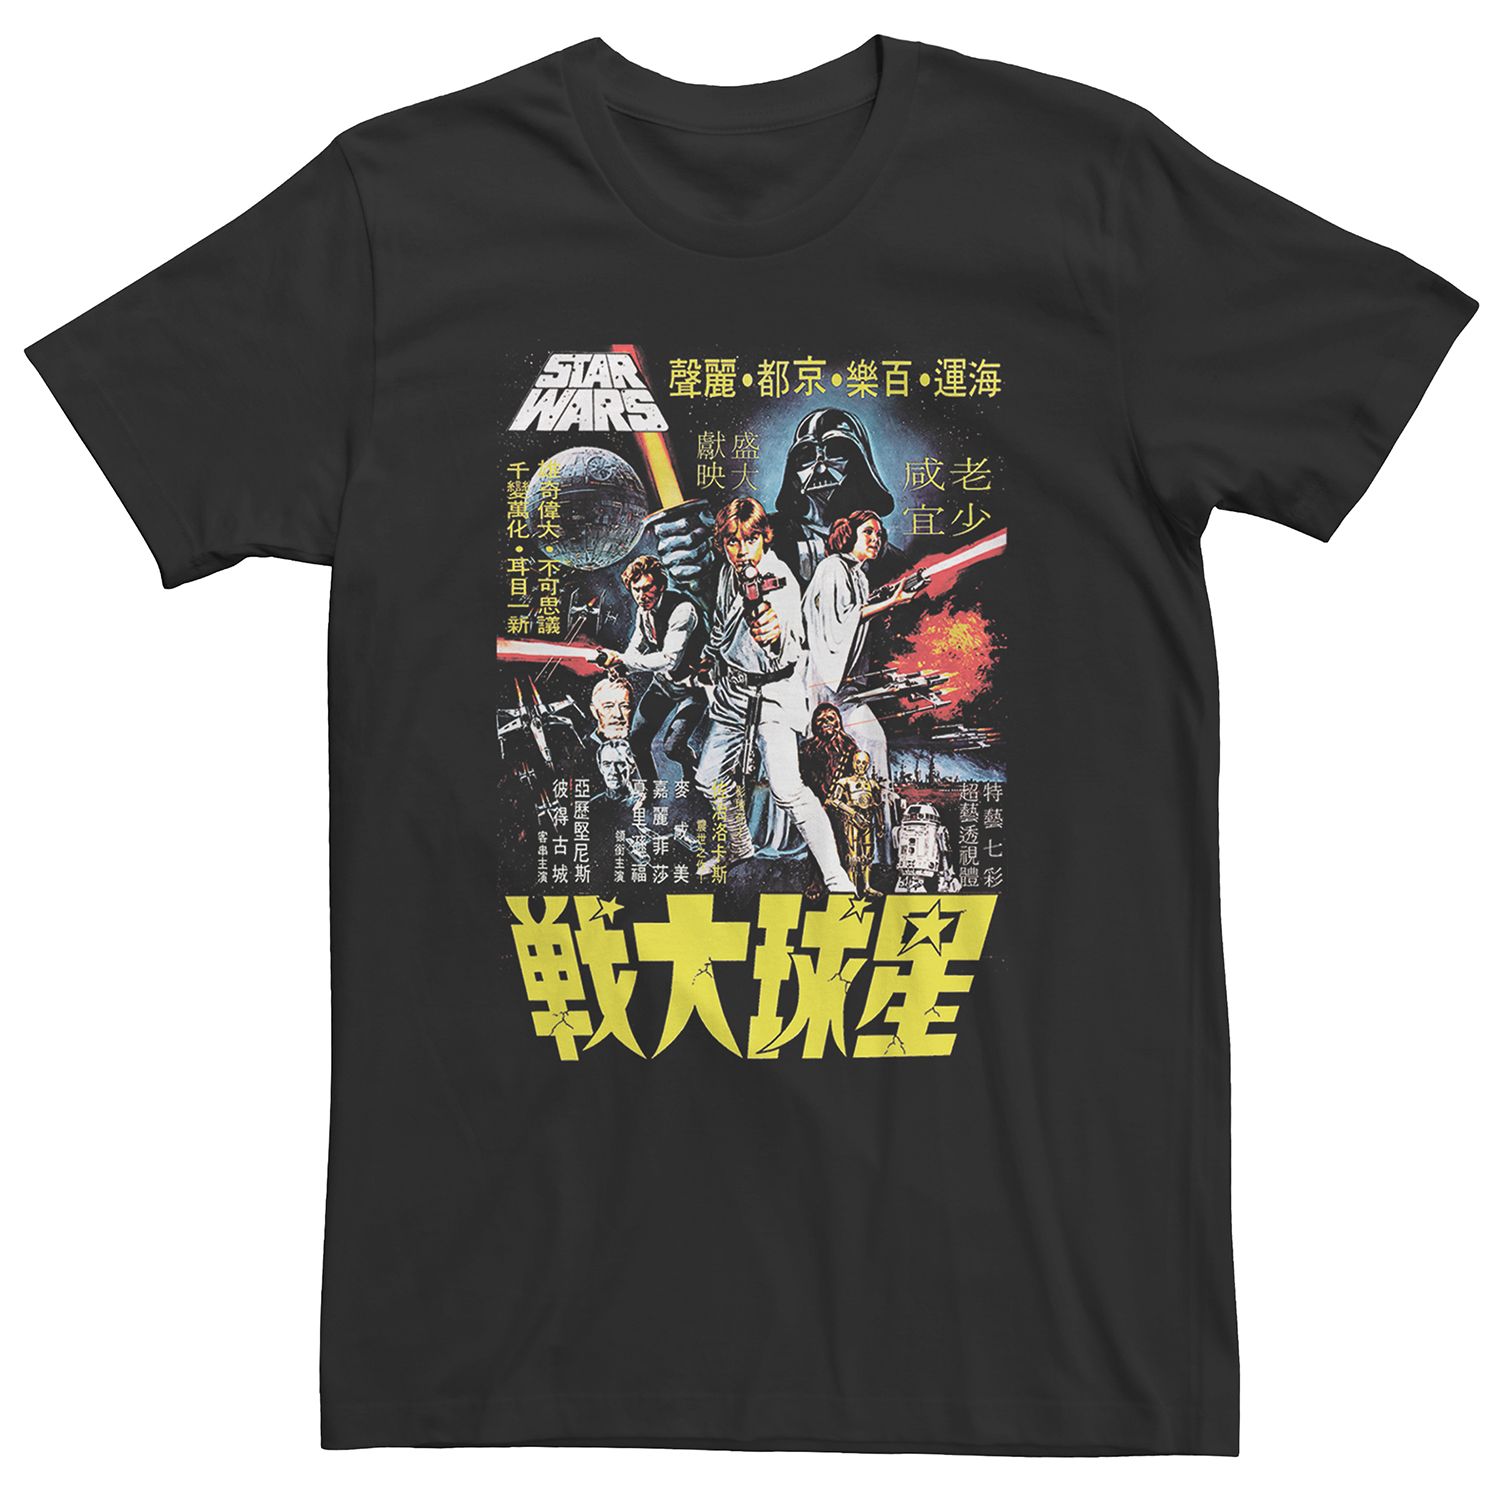 цена Мужская футболка с плакатом «Звездные войны» Licensed Character, черный